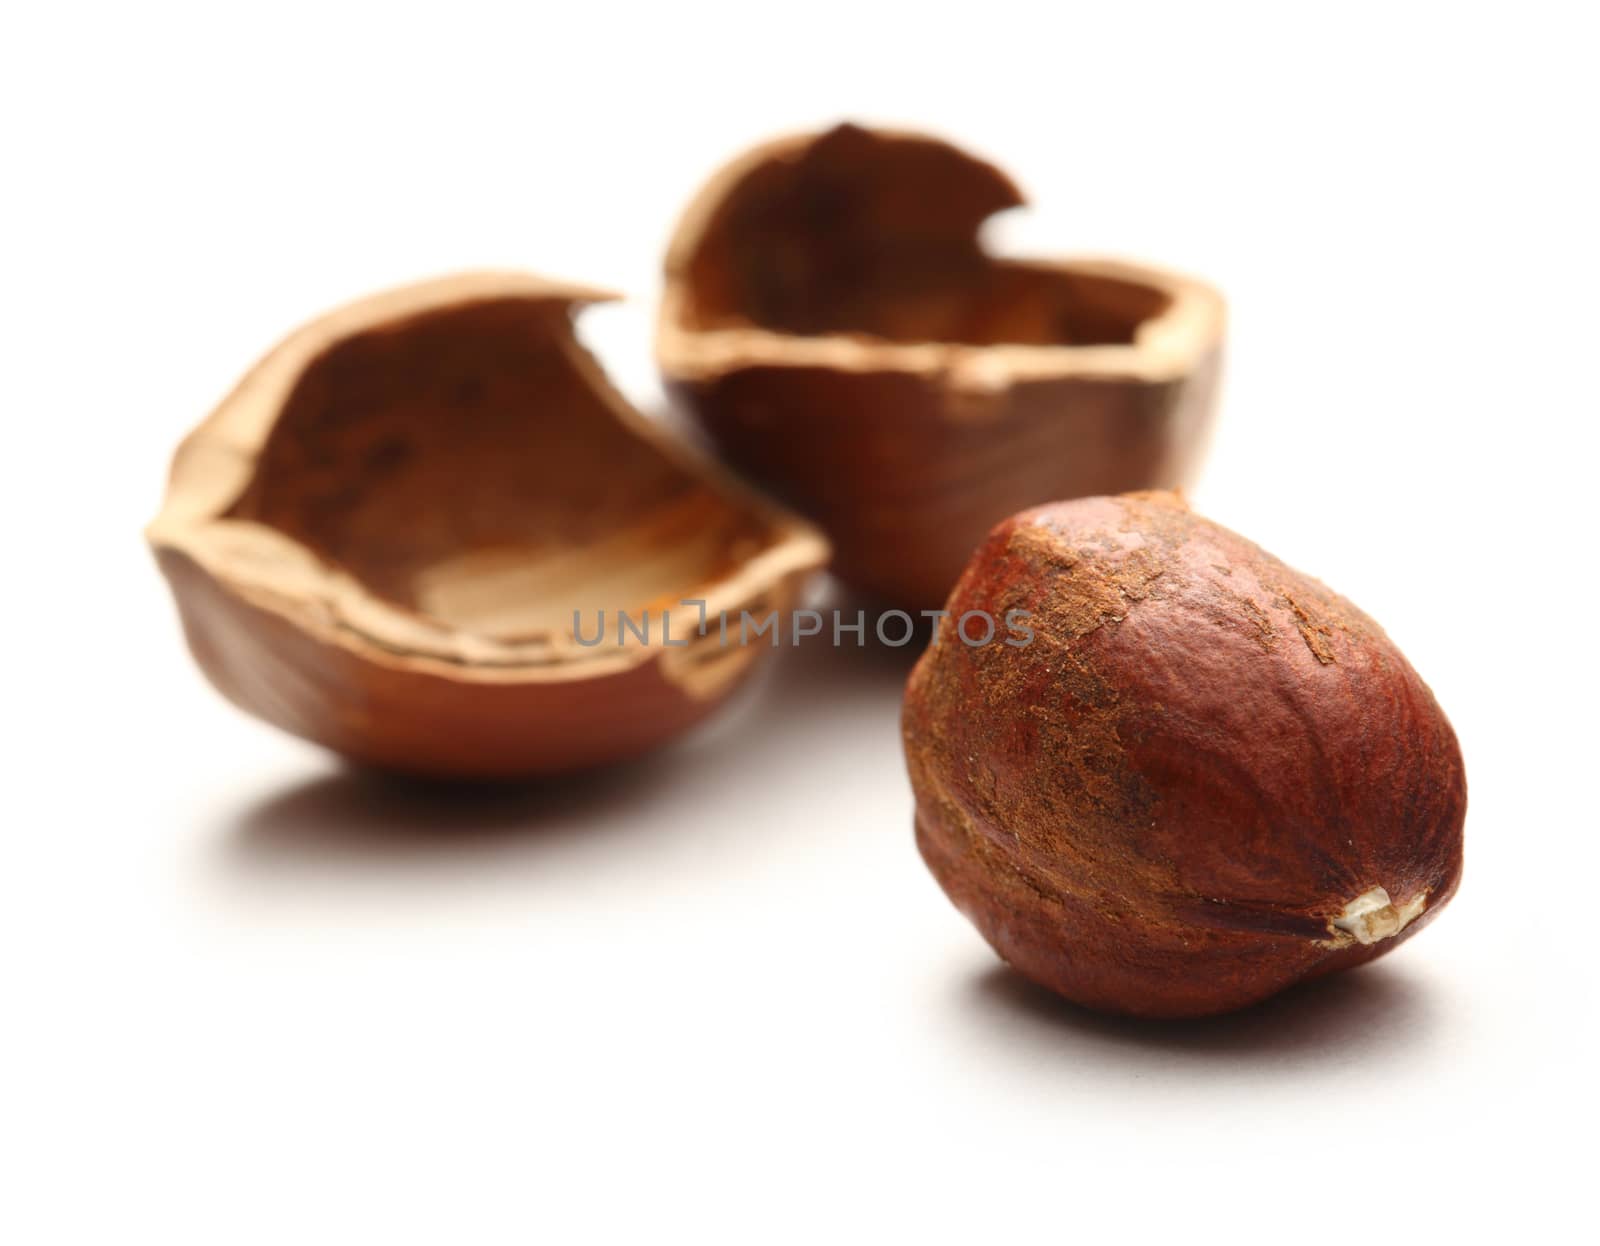 Whole and cracked hazelnuts by Garsya